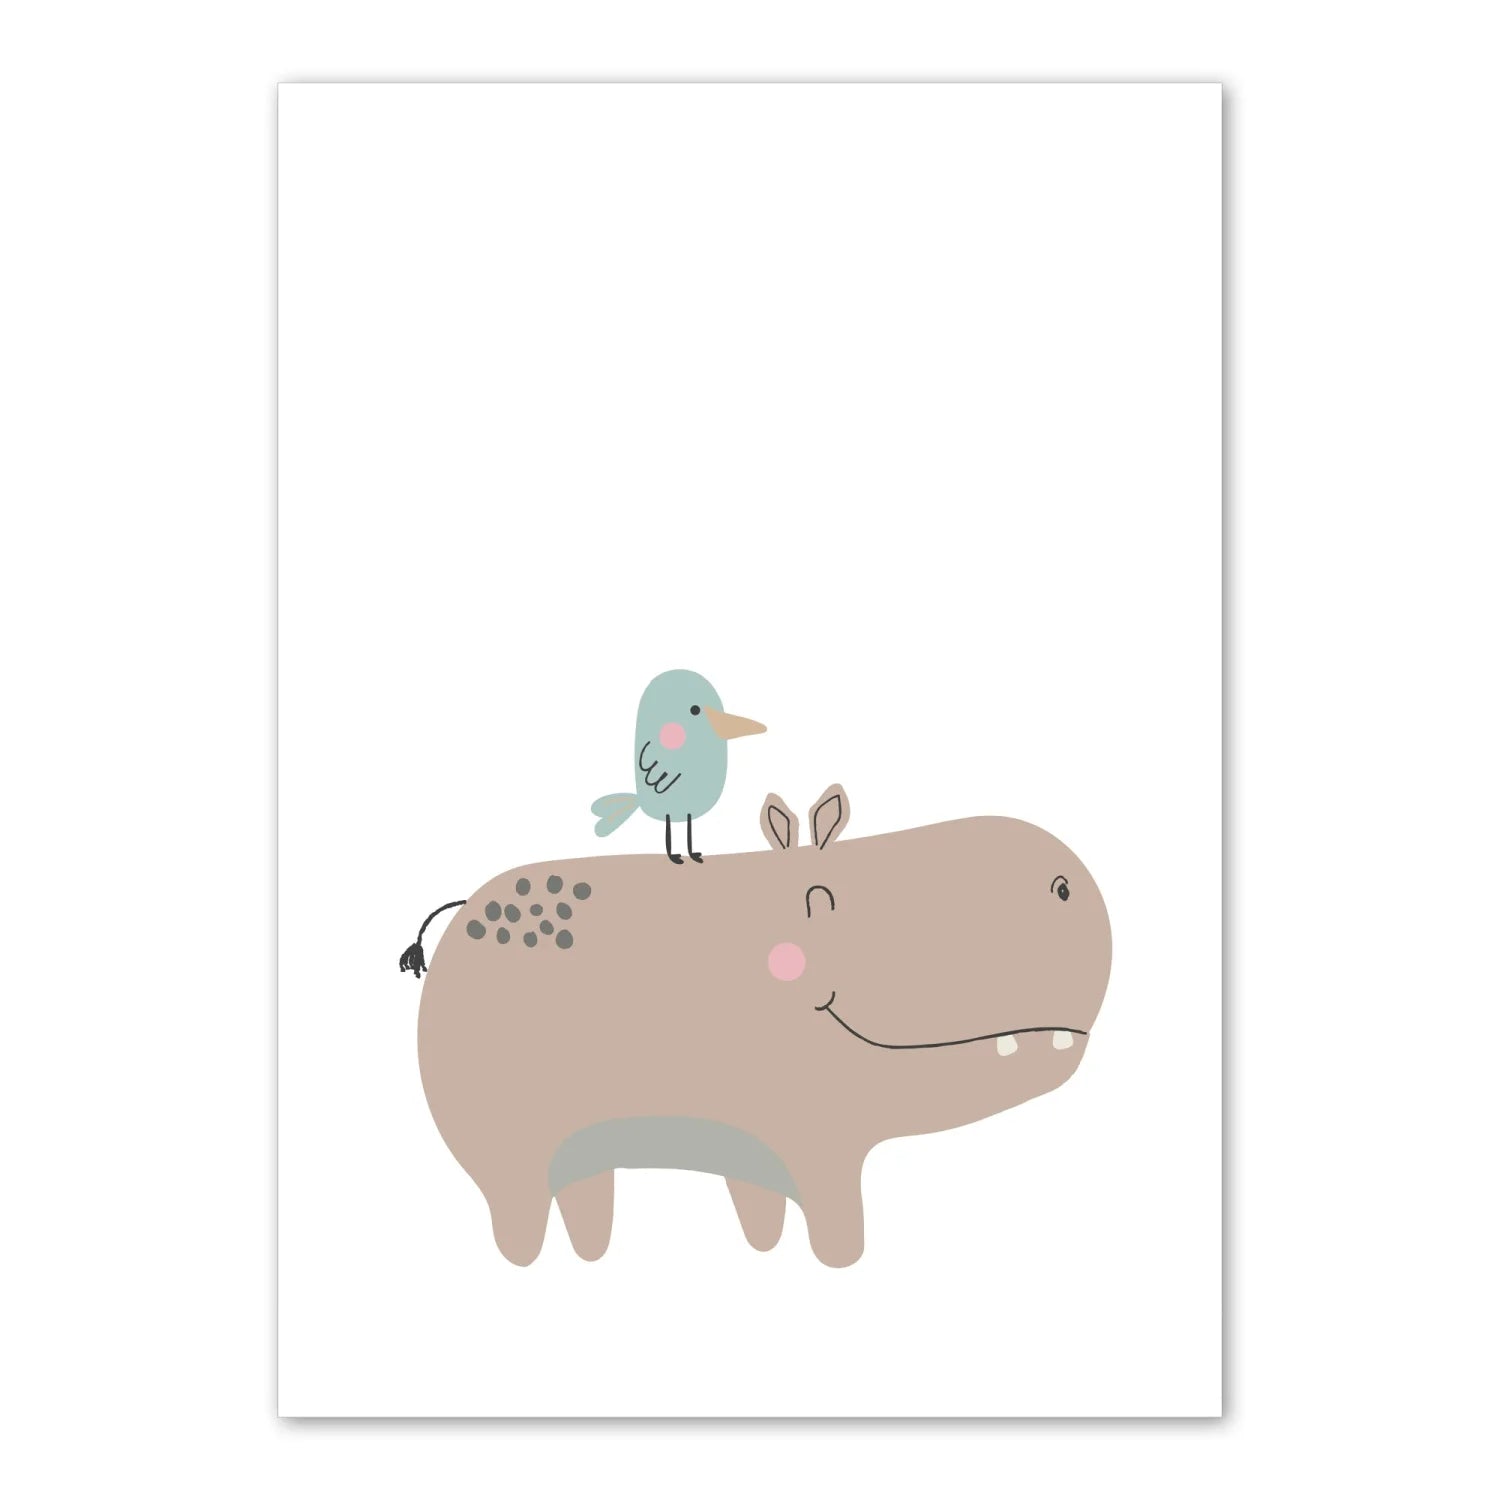 Hippo and Elephant Print - Prints Animals